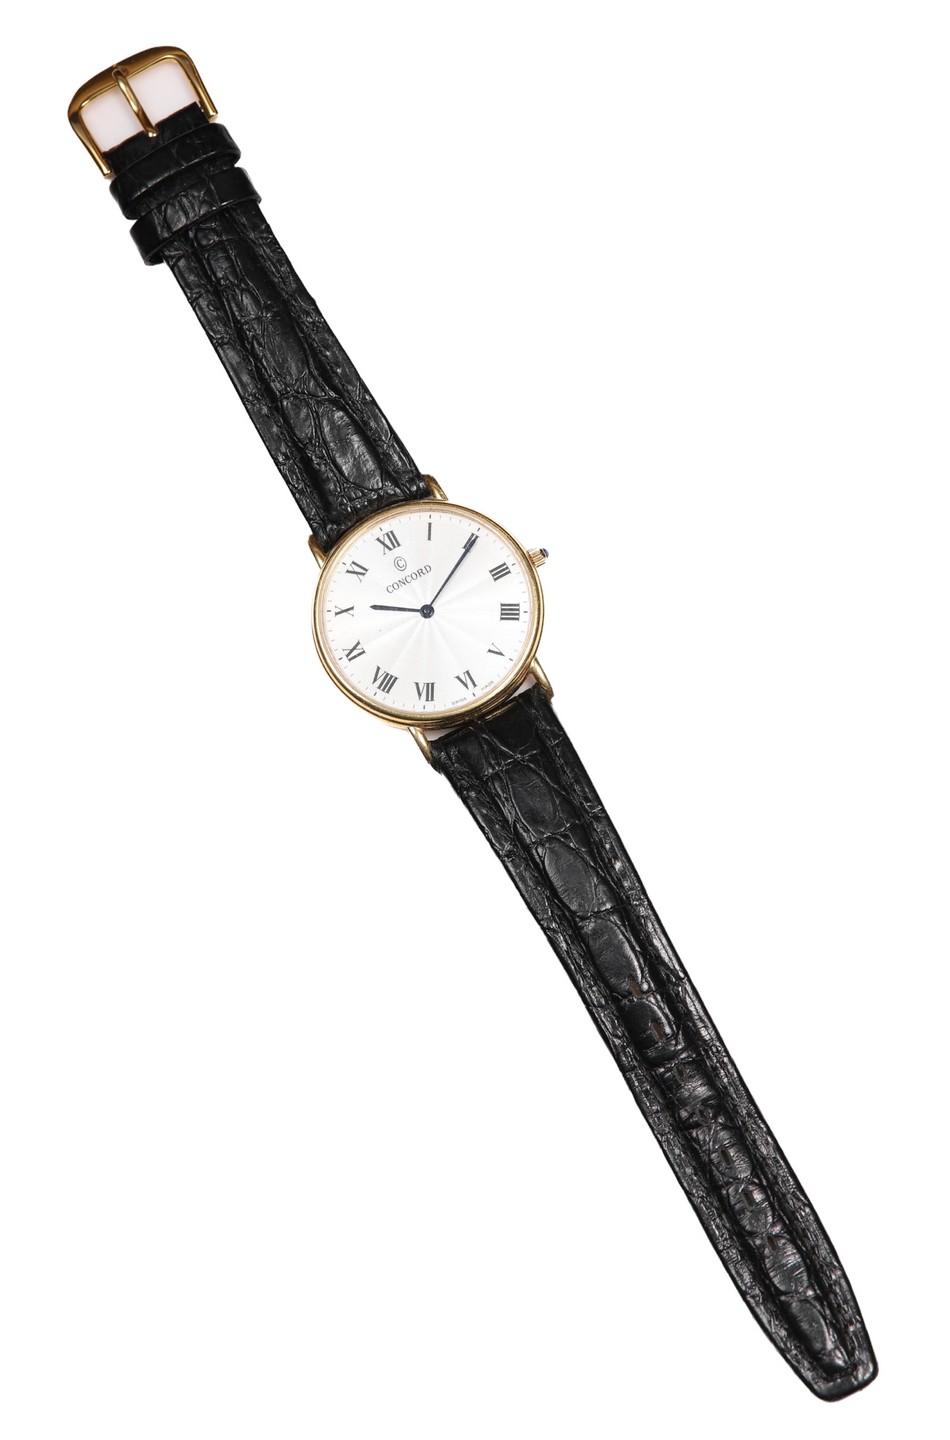 Concord 18K mens wristwatch, model